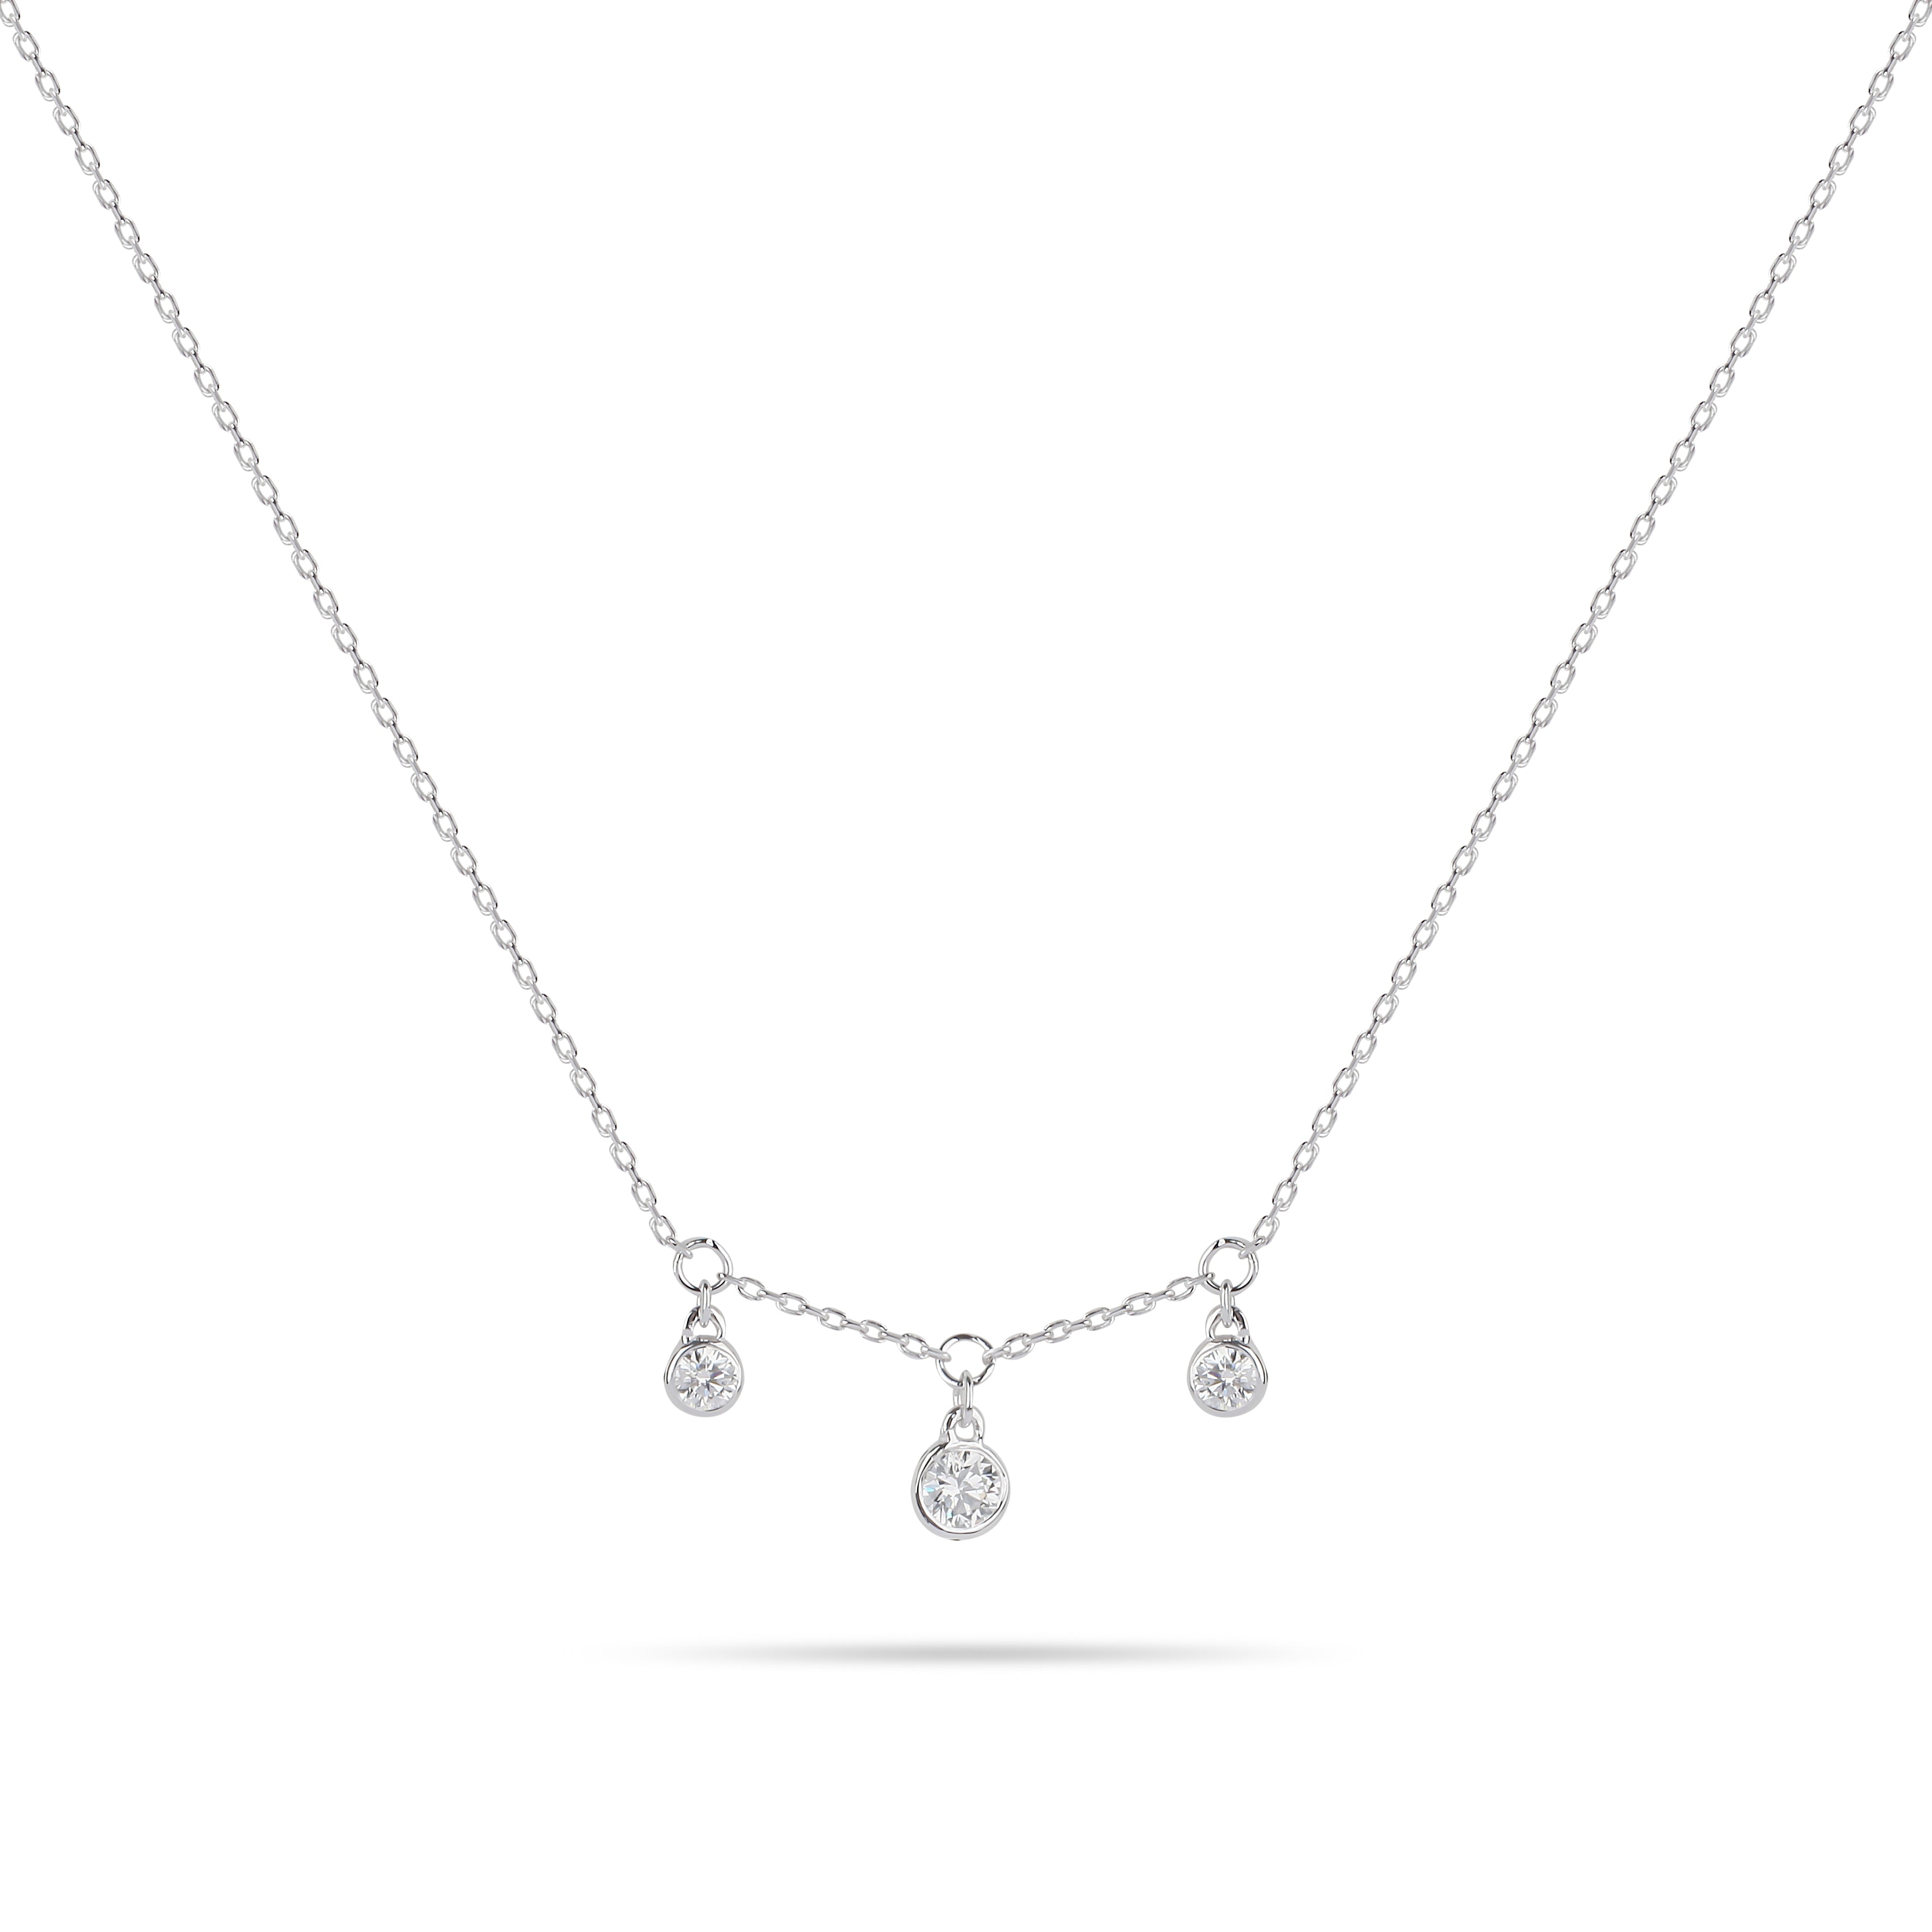 Triple Diamond Chain Necklace | Chain Necklace Women